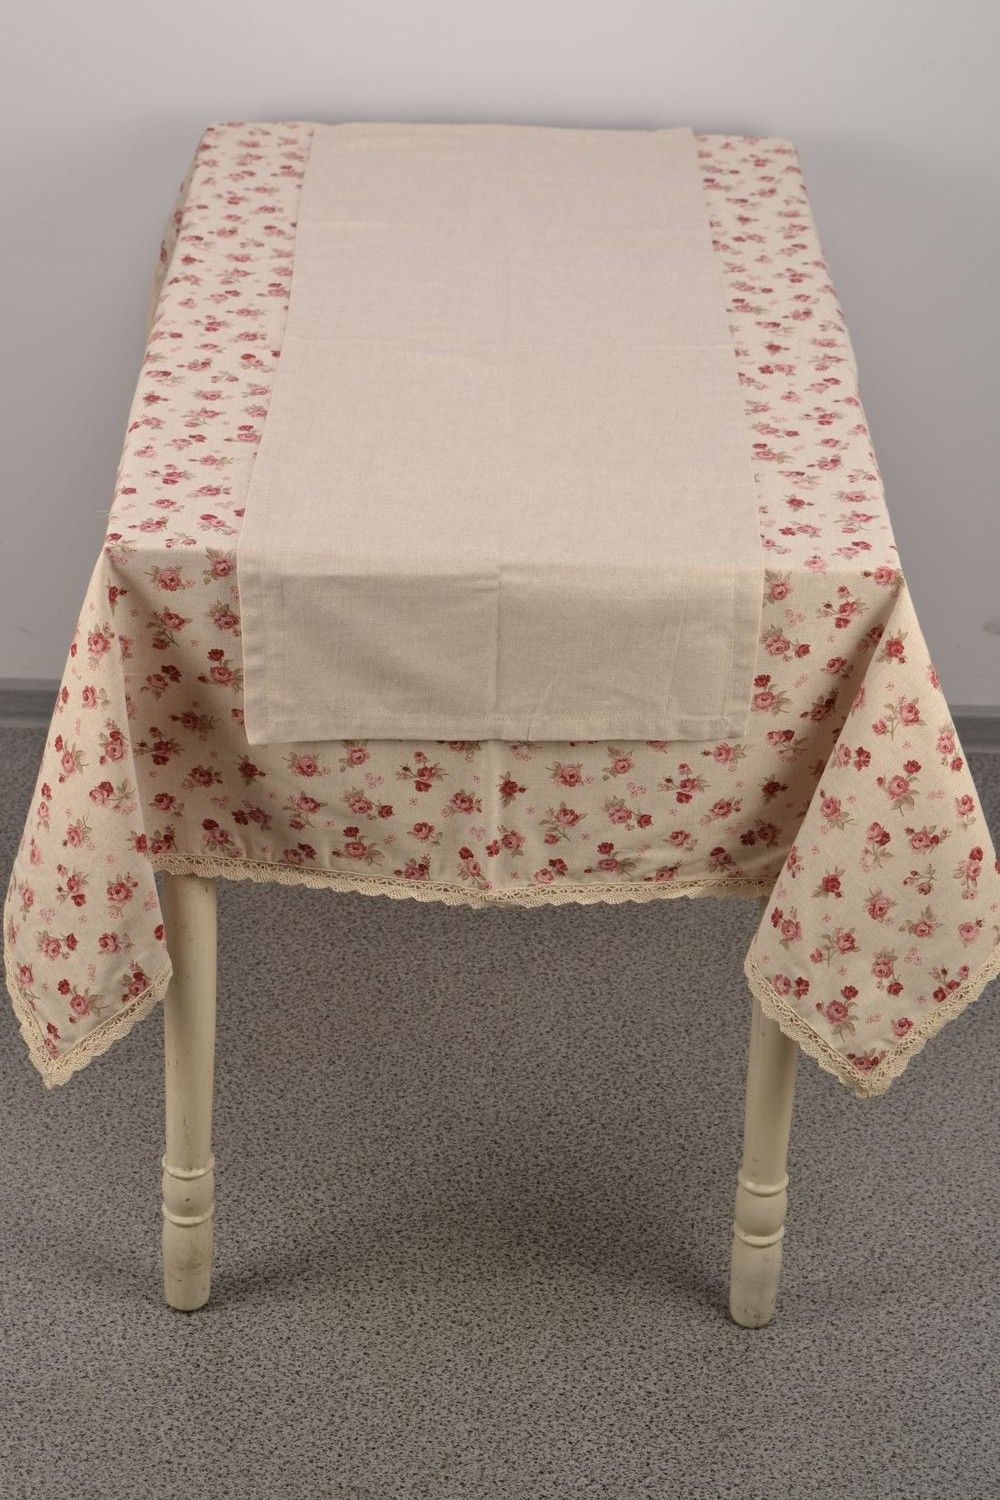 Stylish handmade tablecloth kitchen design home textiles table setting ideas photo 2